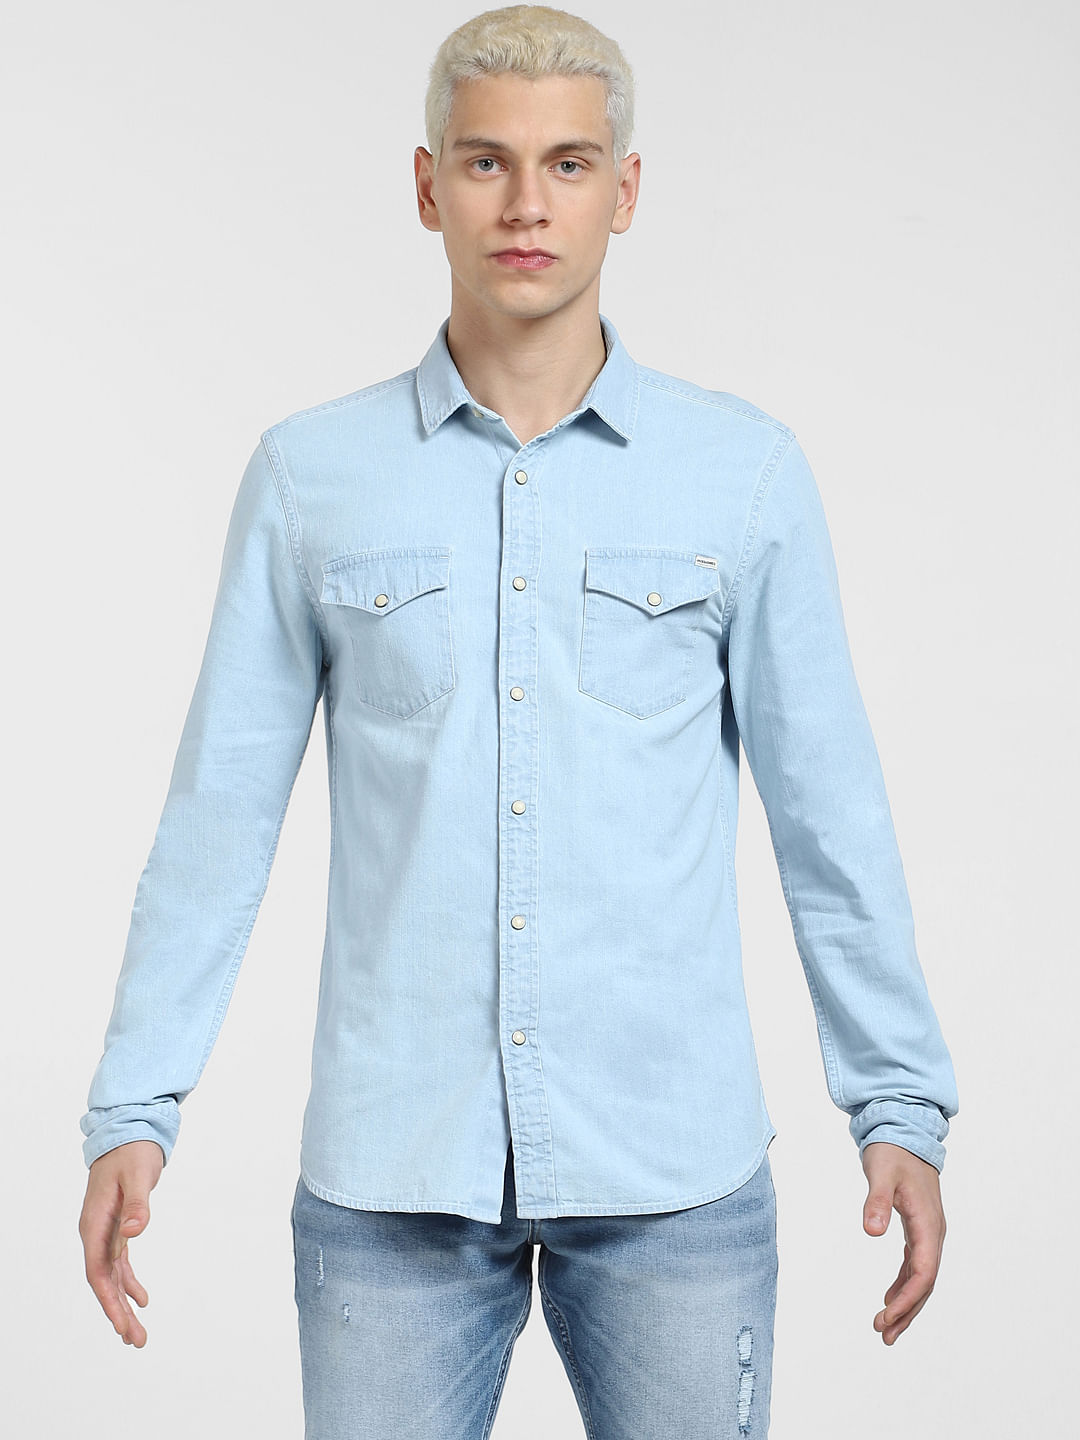 Plain Men Sky Blue Denim Shirt, Slim Fit at Rs 400 in New Delhi | ID:  23771741433